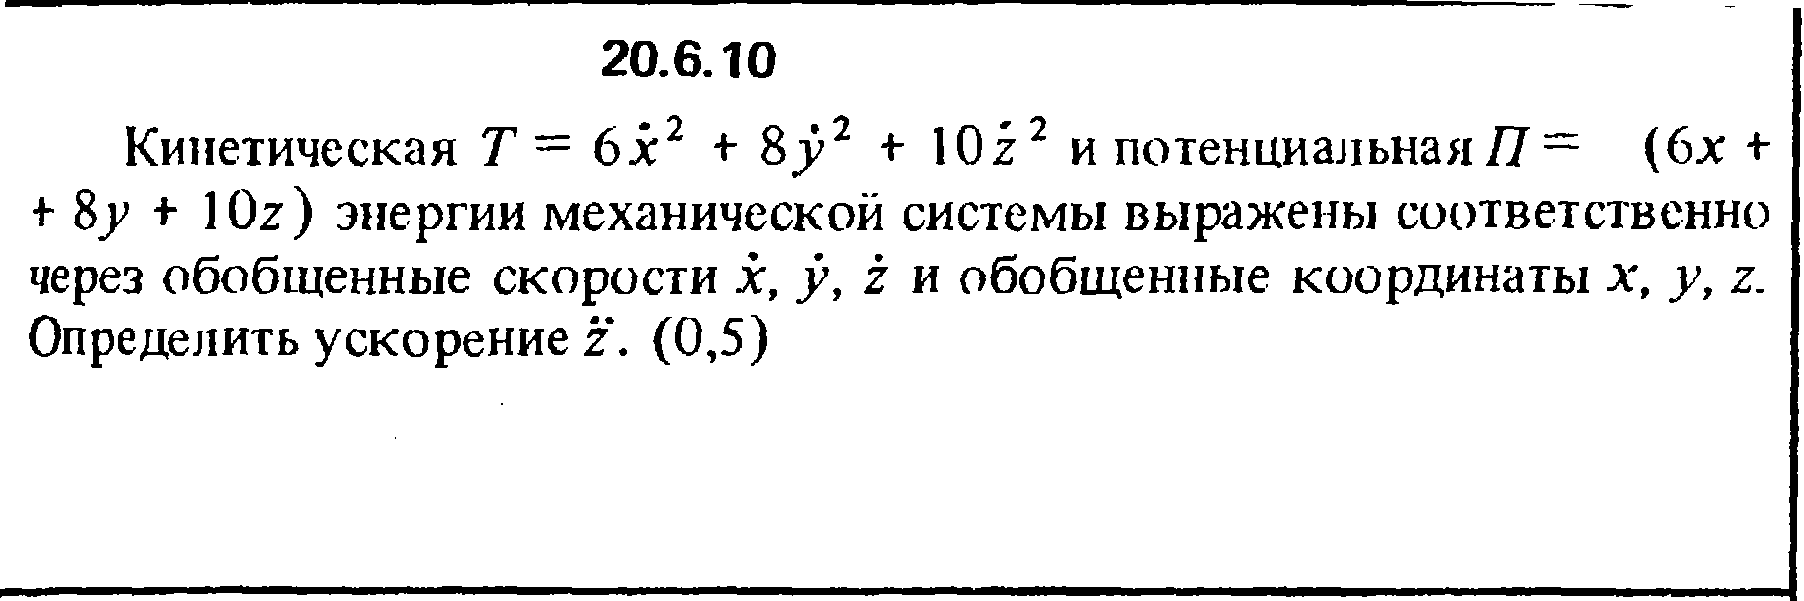 Решение 20.6.10 из сборника (решебника) Кепе О.Е. 1989